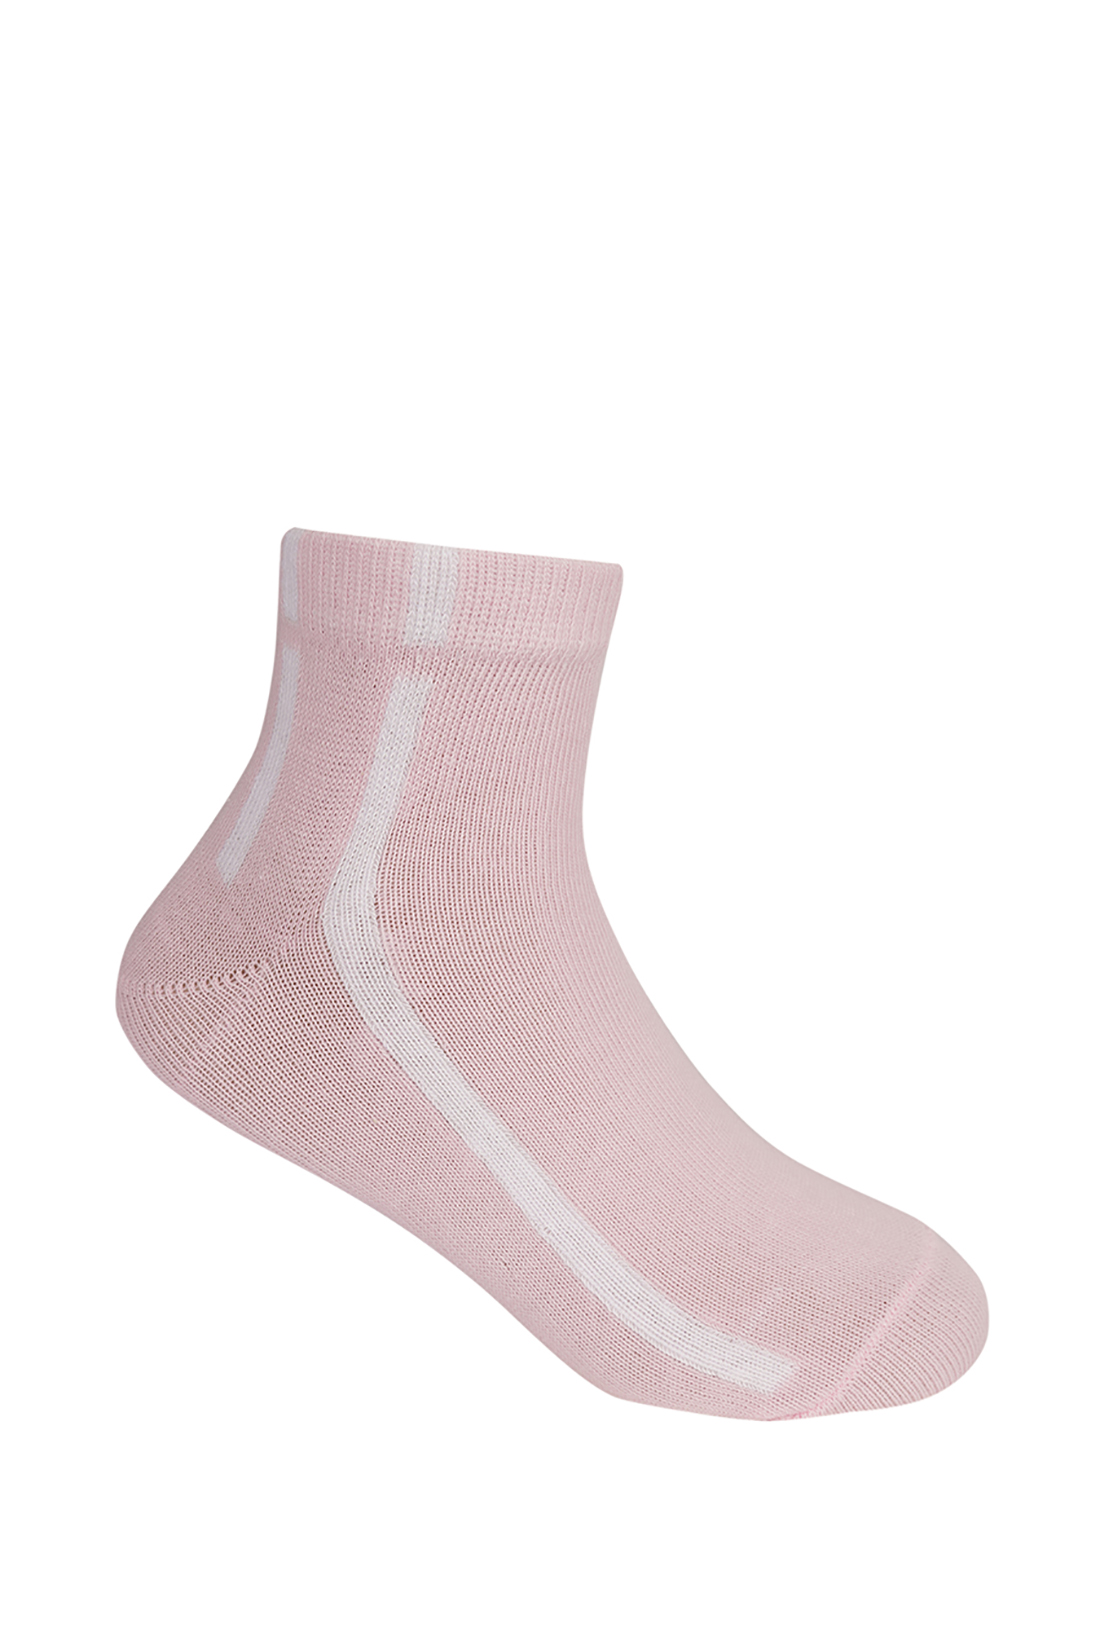 Носки для девочки (арт. baon BK390007), размер 29/31, цвет розовый